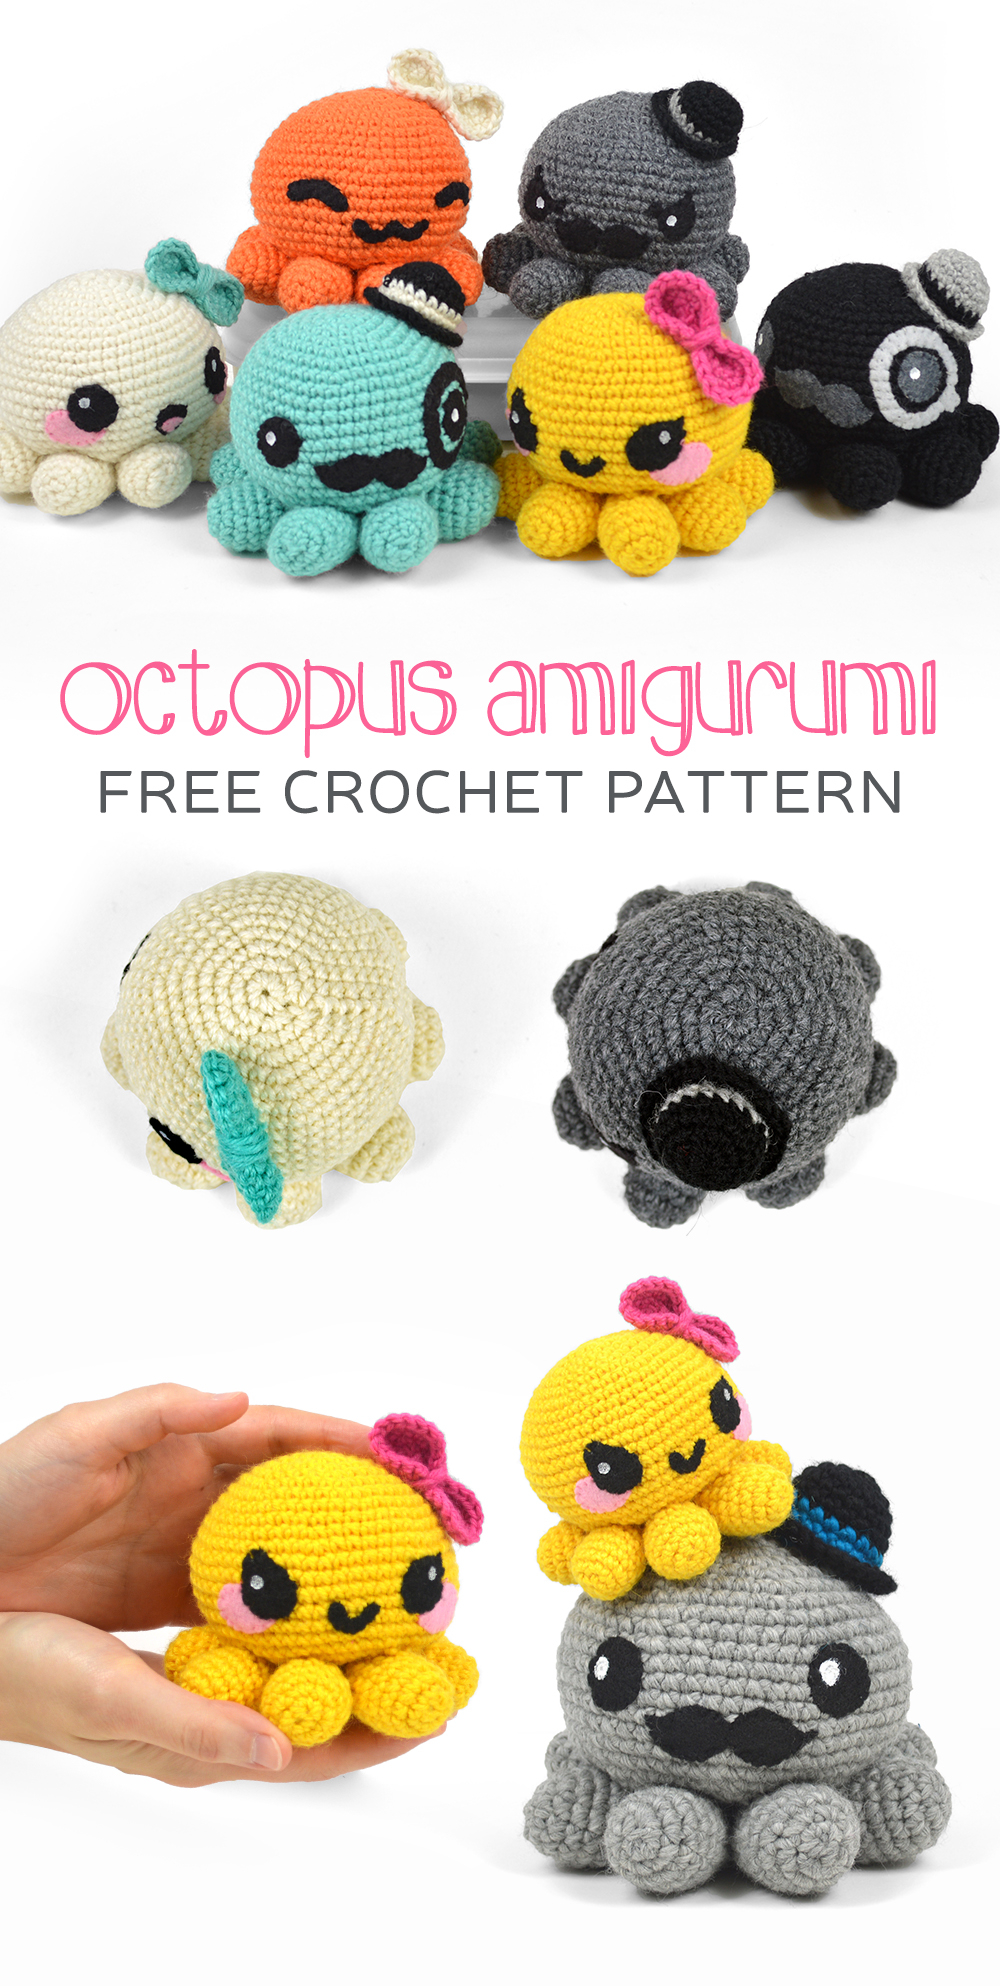 Free Amigurumi Crochet Patterns Free Crochet Pattern Friday Octopus Amigurumi Choly Knight